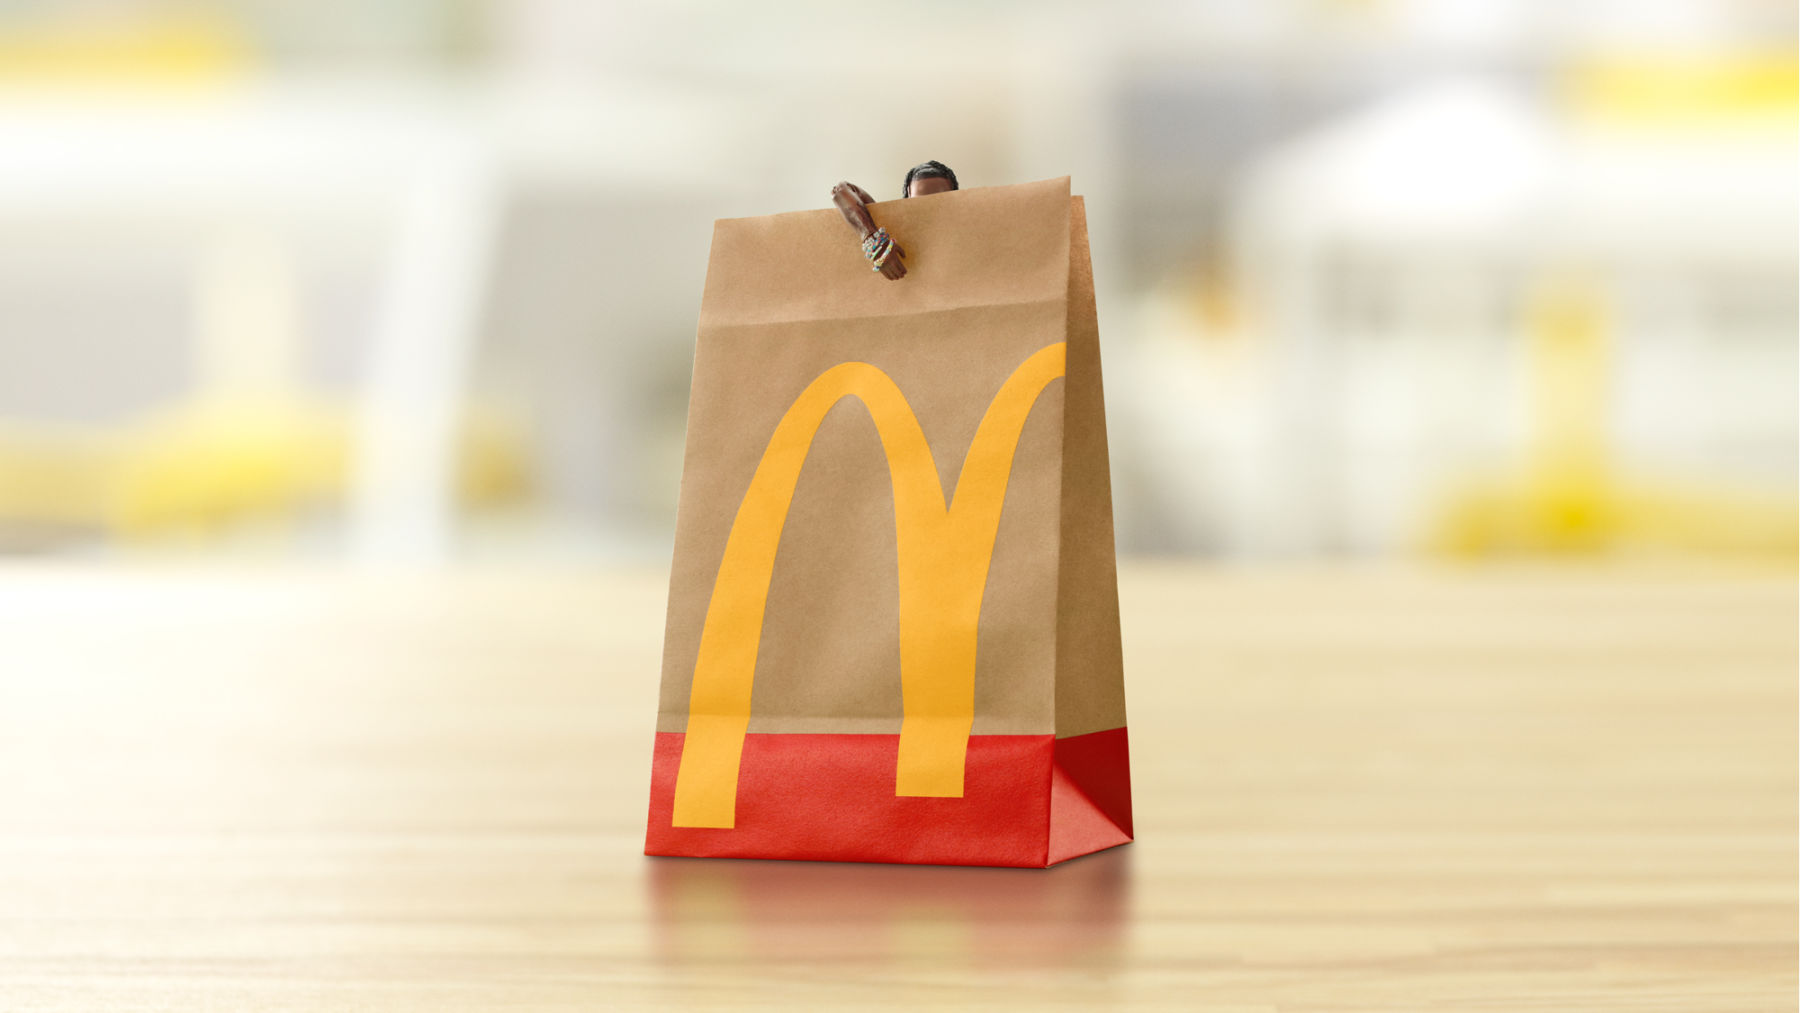 McDonald's - Cactus Jack is coming 🌵 The Travis Scott Meal drops 9/8.